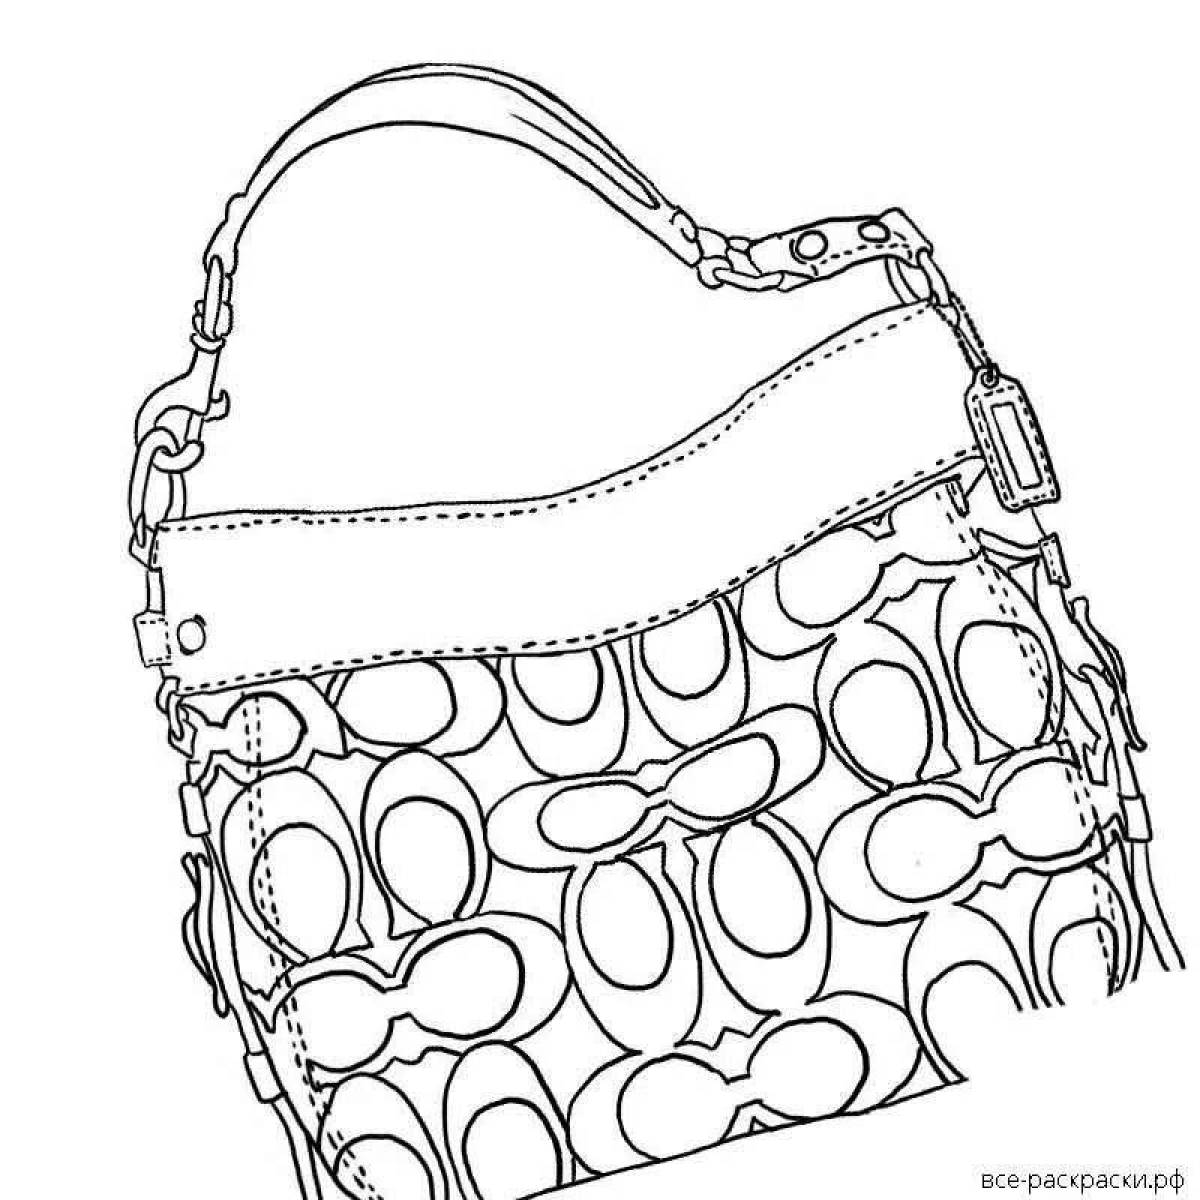 Fantastic coloring of a handbag for girls